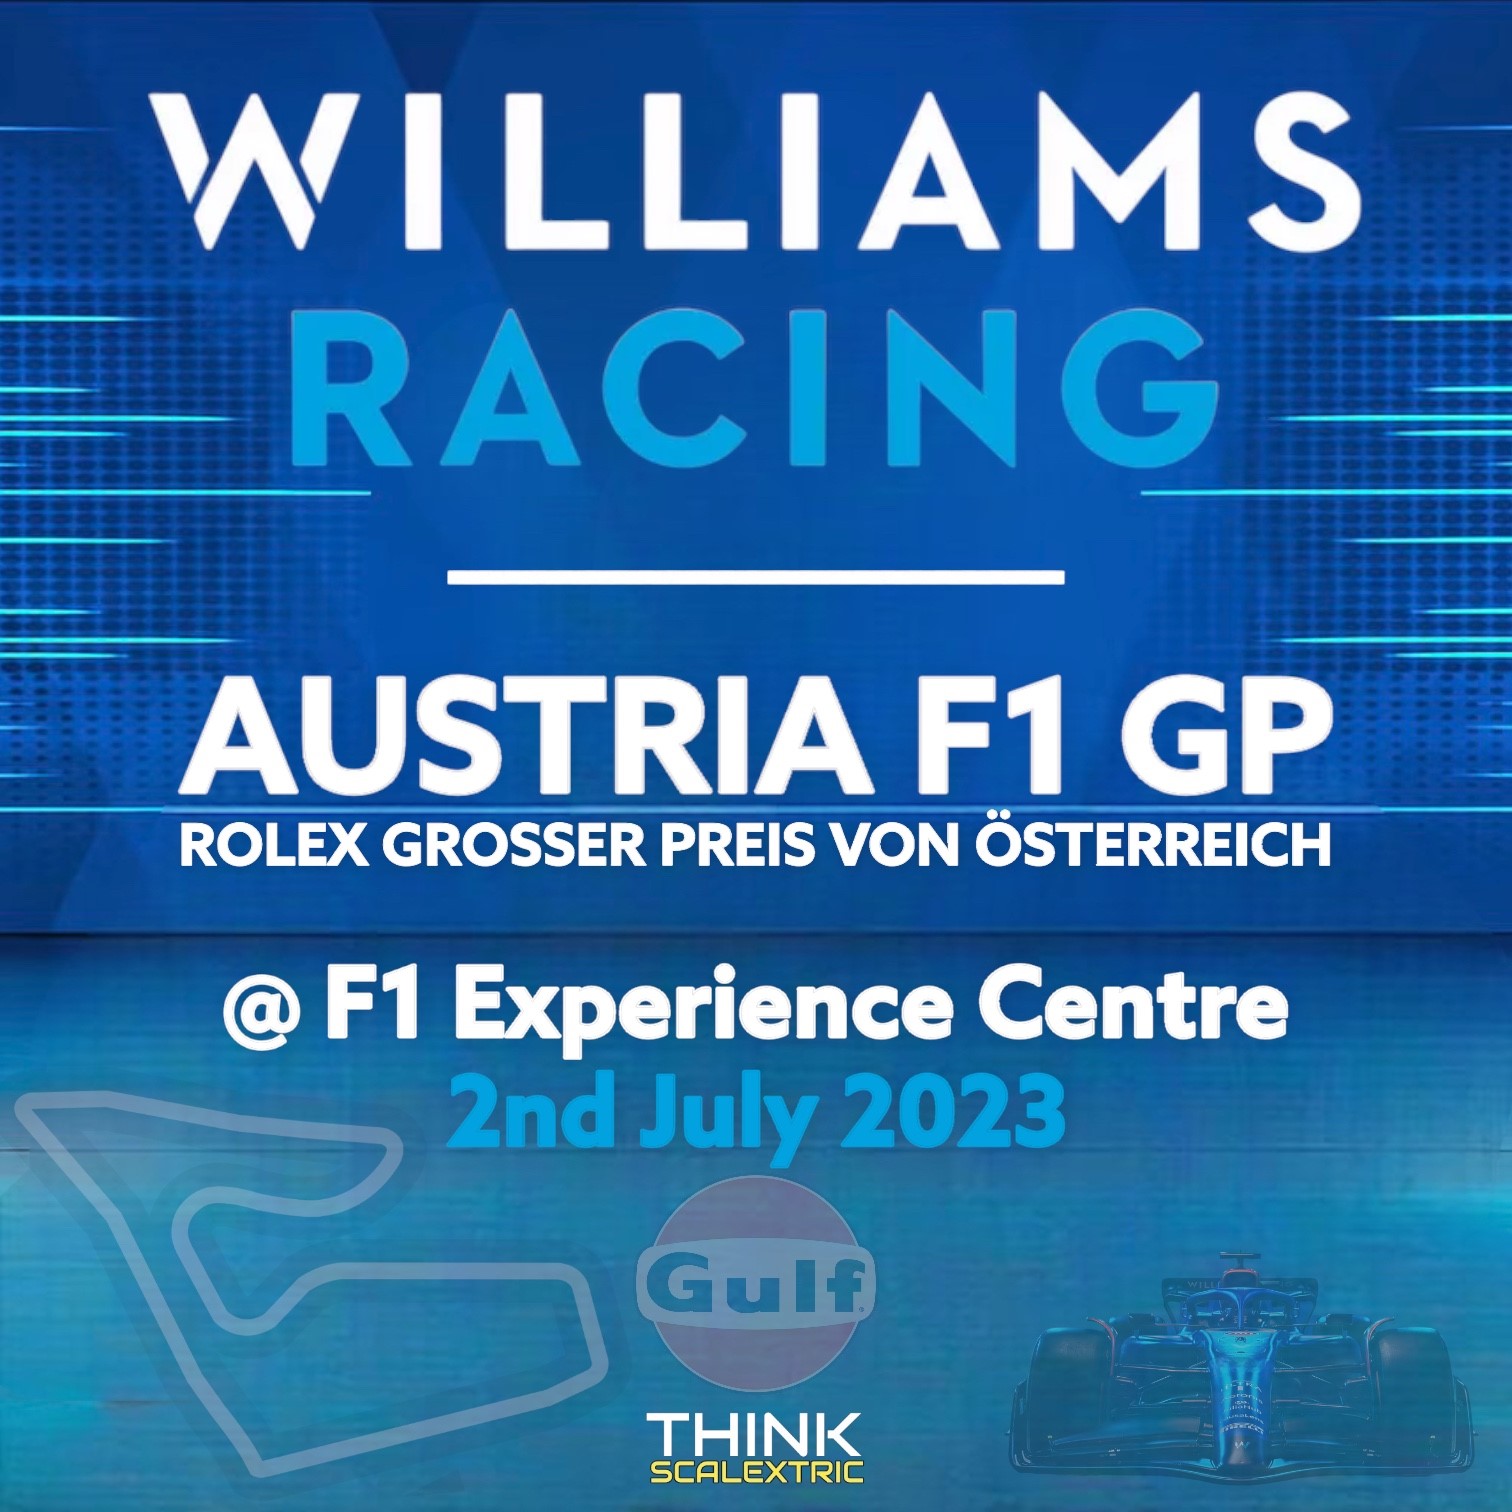 williams f1 racing race day hospitality austria f1 2023 gp